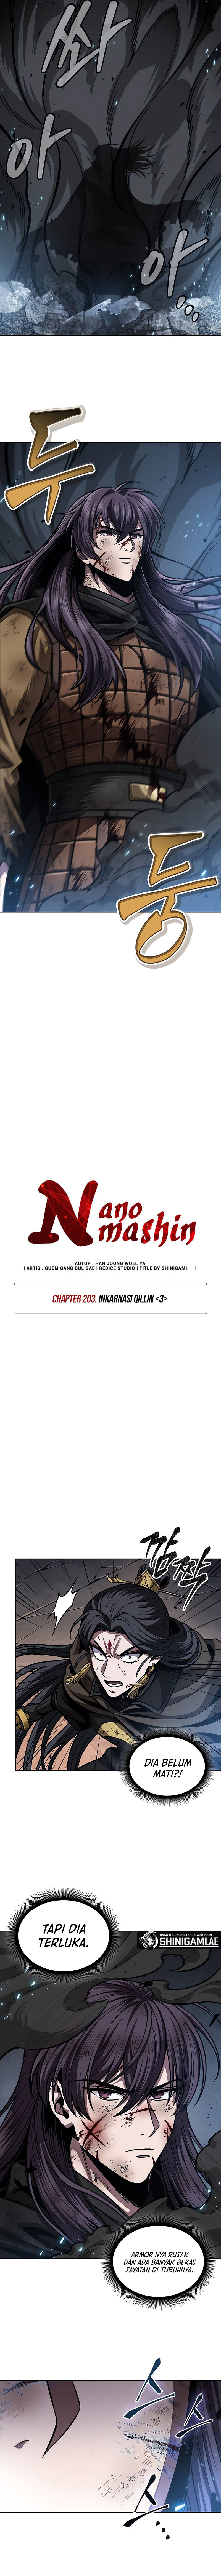 nano-m Chapter 203